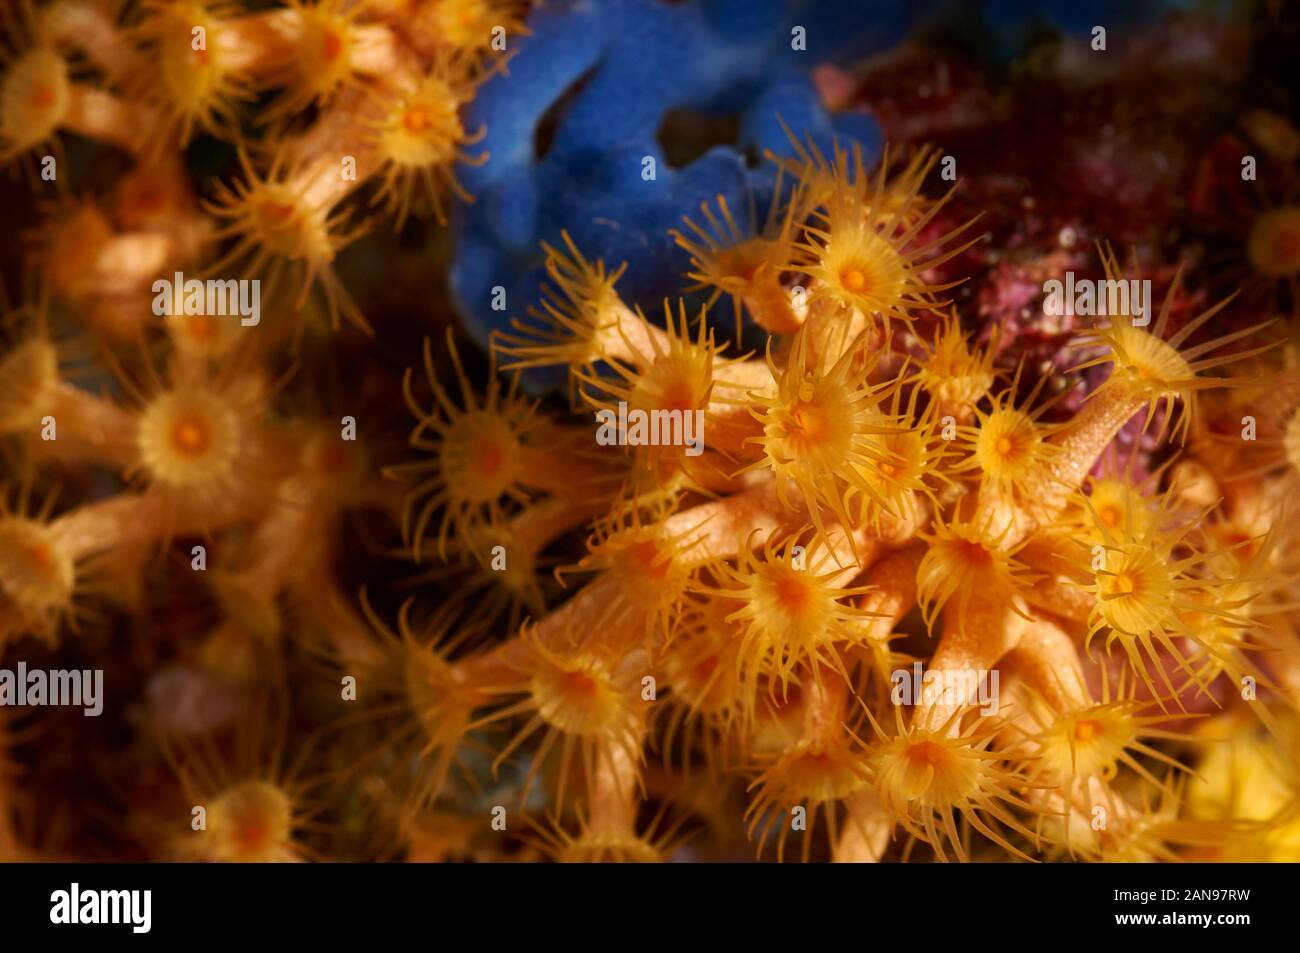 Gelber Cluster Anemone (Parazoanthus axinellae) Close-up in Ses Salines Naturpark (Formentera, Pityuses, Balearen, Mittelmeer, Spanien) Stockfoto